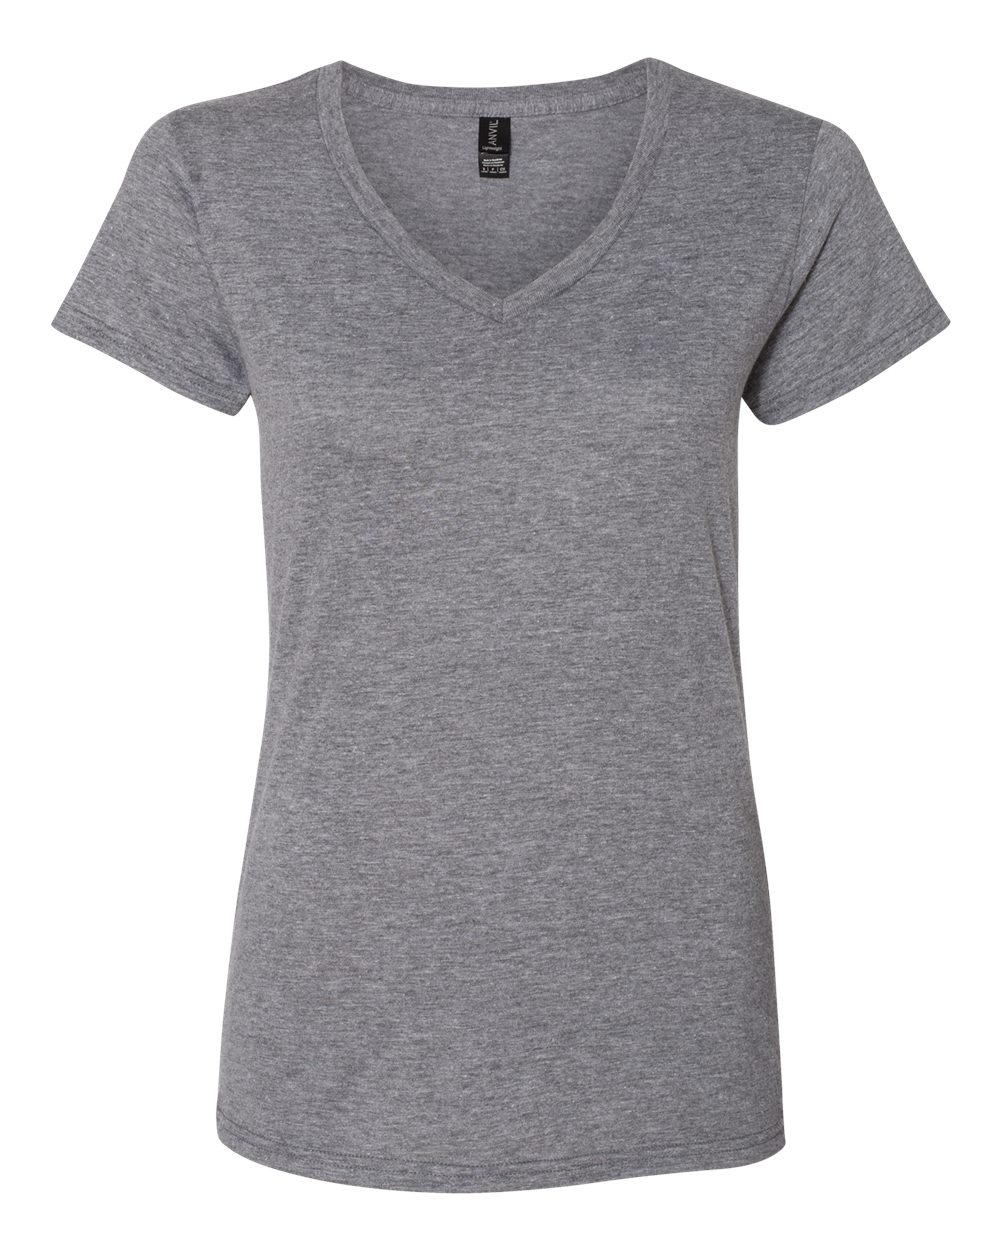 V-neck T-shirt (Anvil), Heather Grey, Ladies, Large